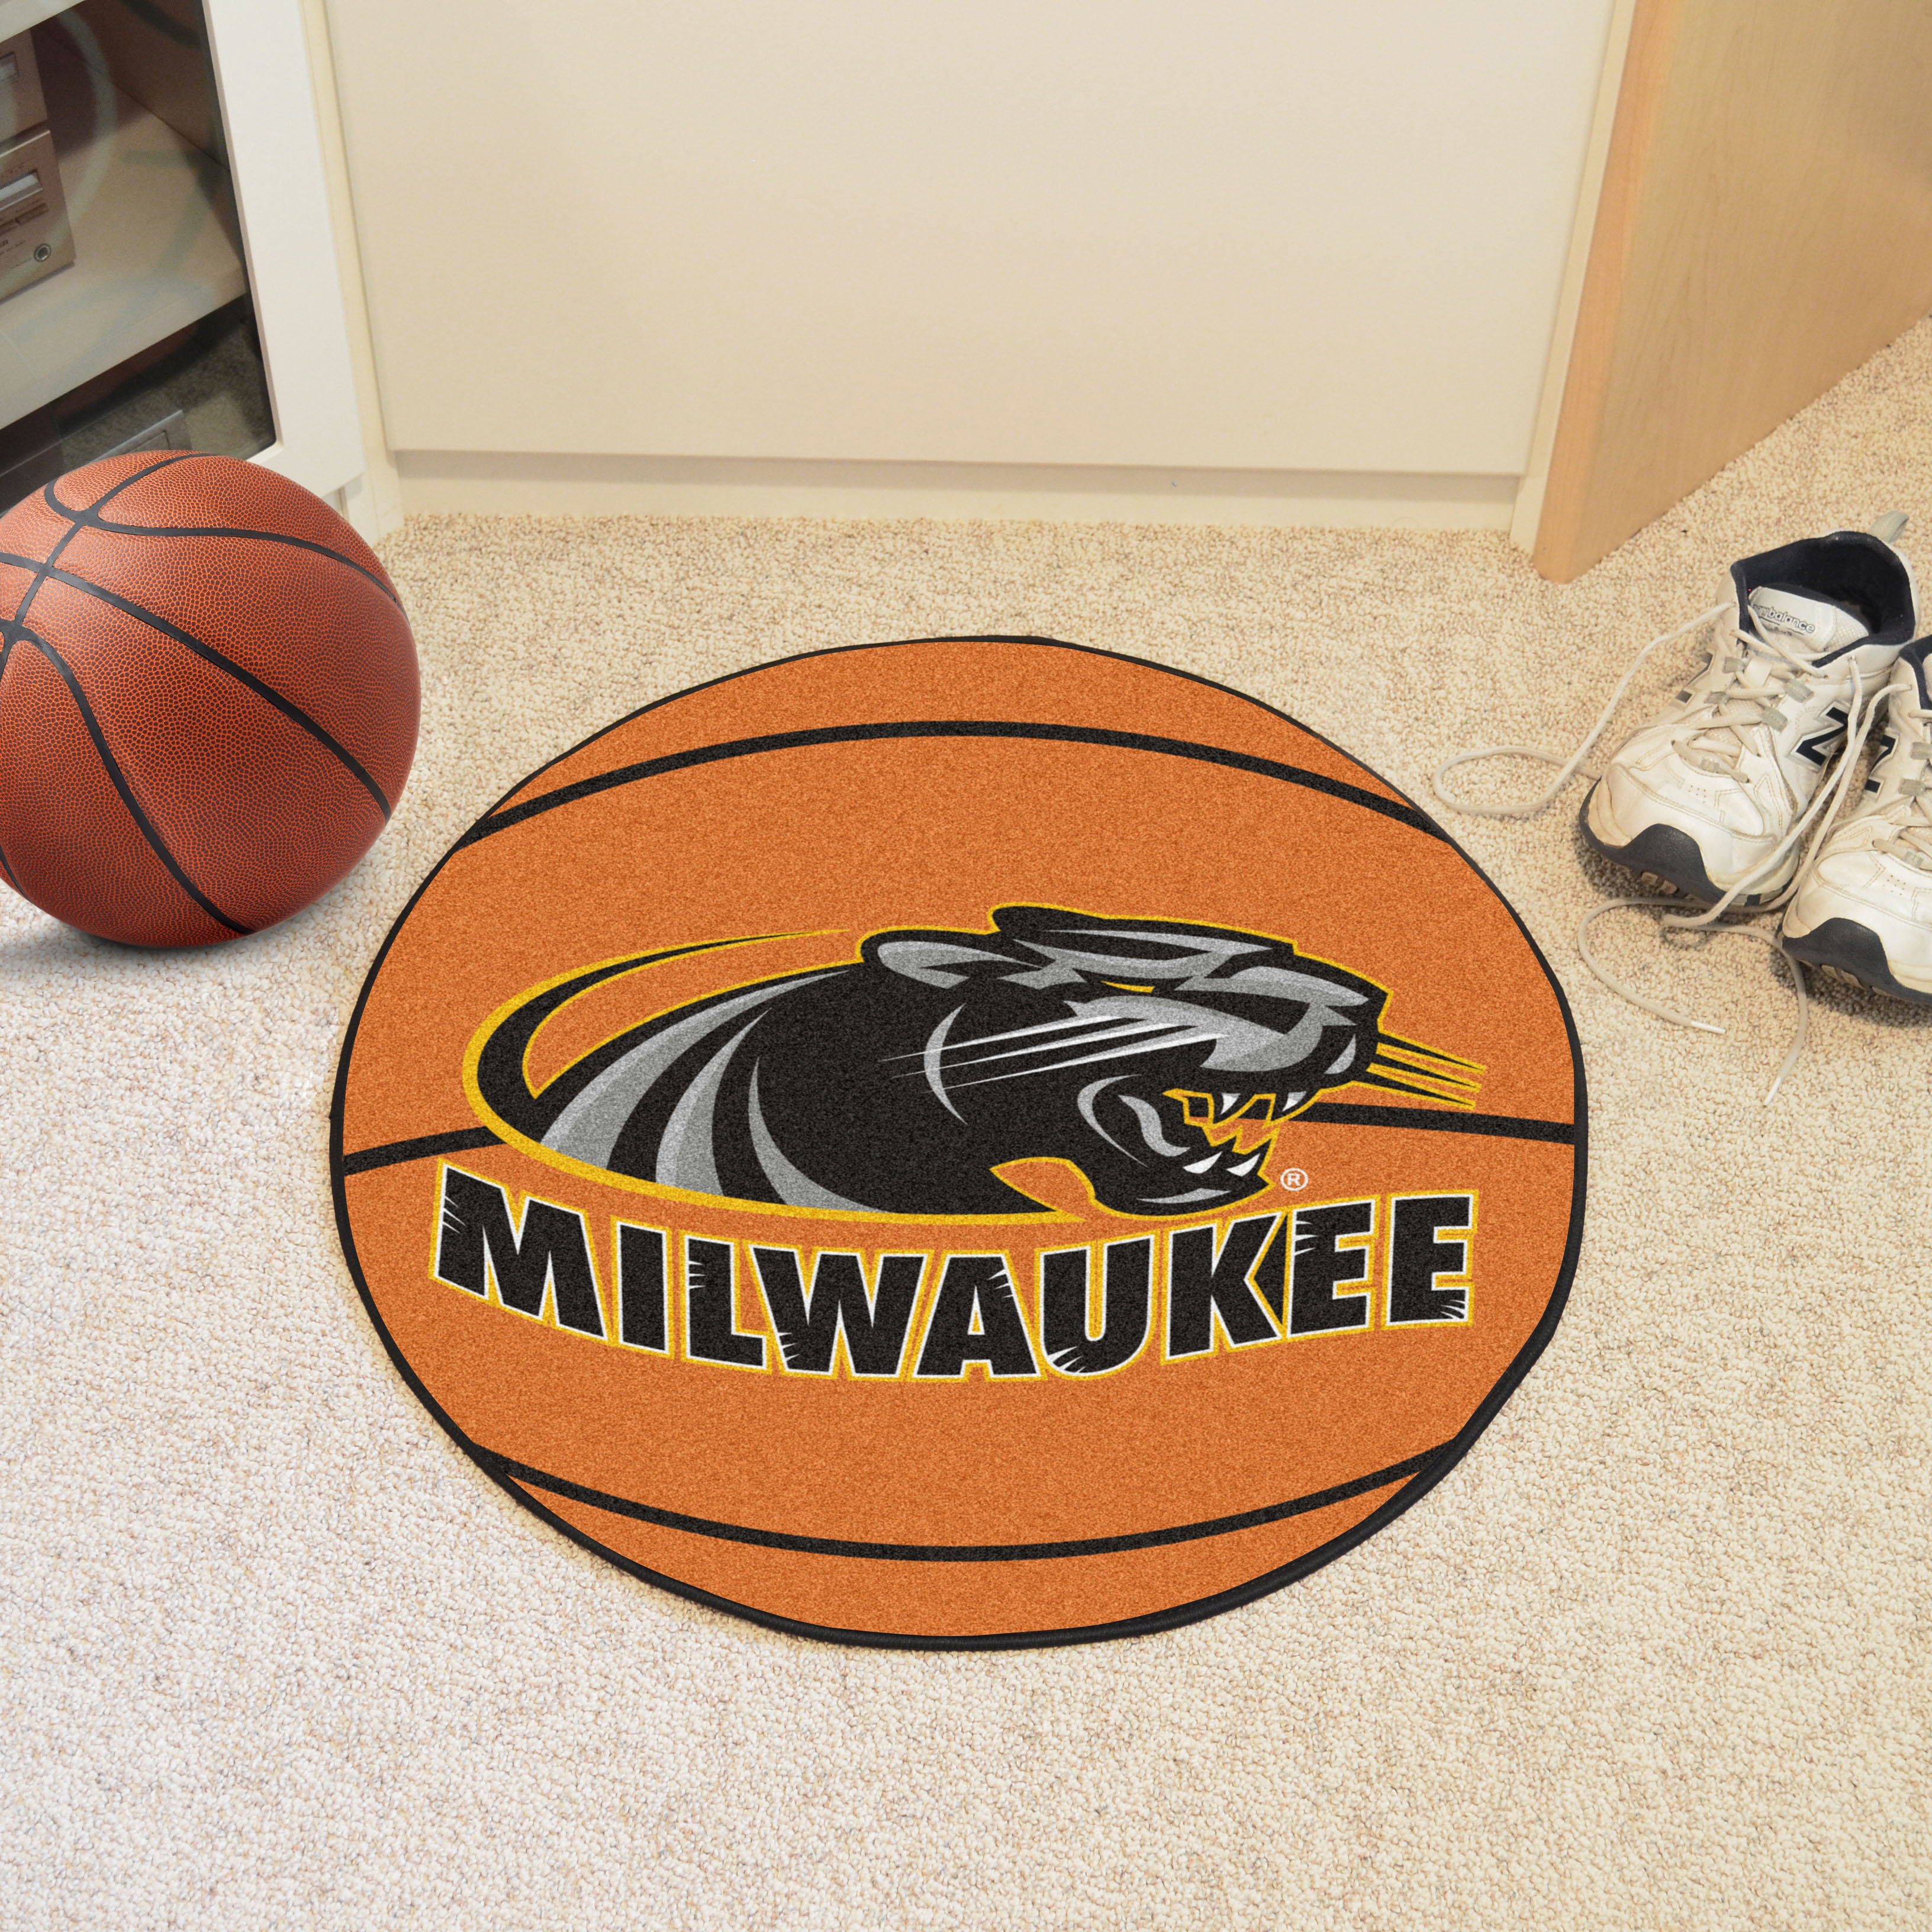 University of Wisconsin-Milwaukee Ball Shaped Area rugs (Ball Shaped Area Rugs: Basketball)